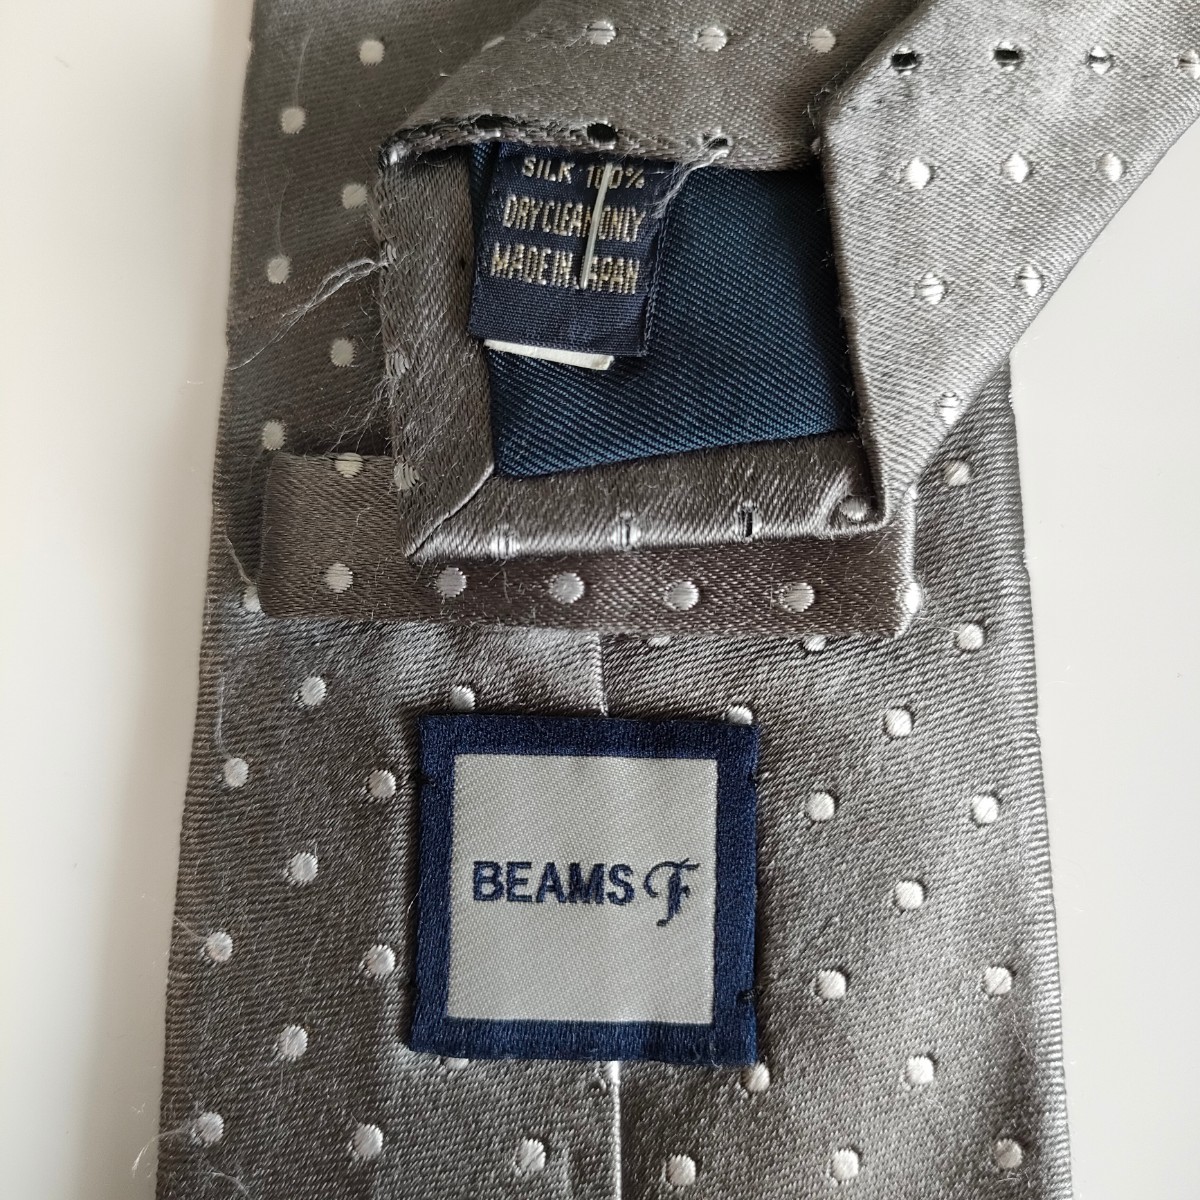 BEAMS F( Beams ef) Beams F, галстук 6